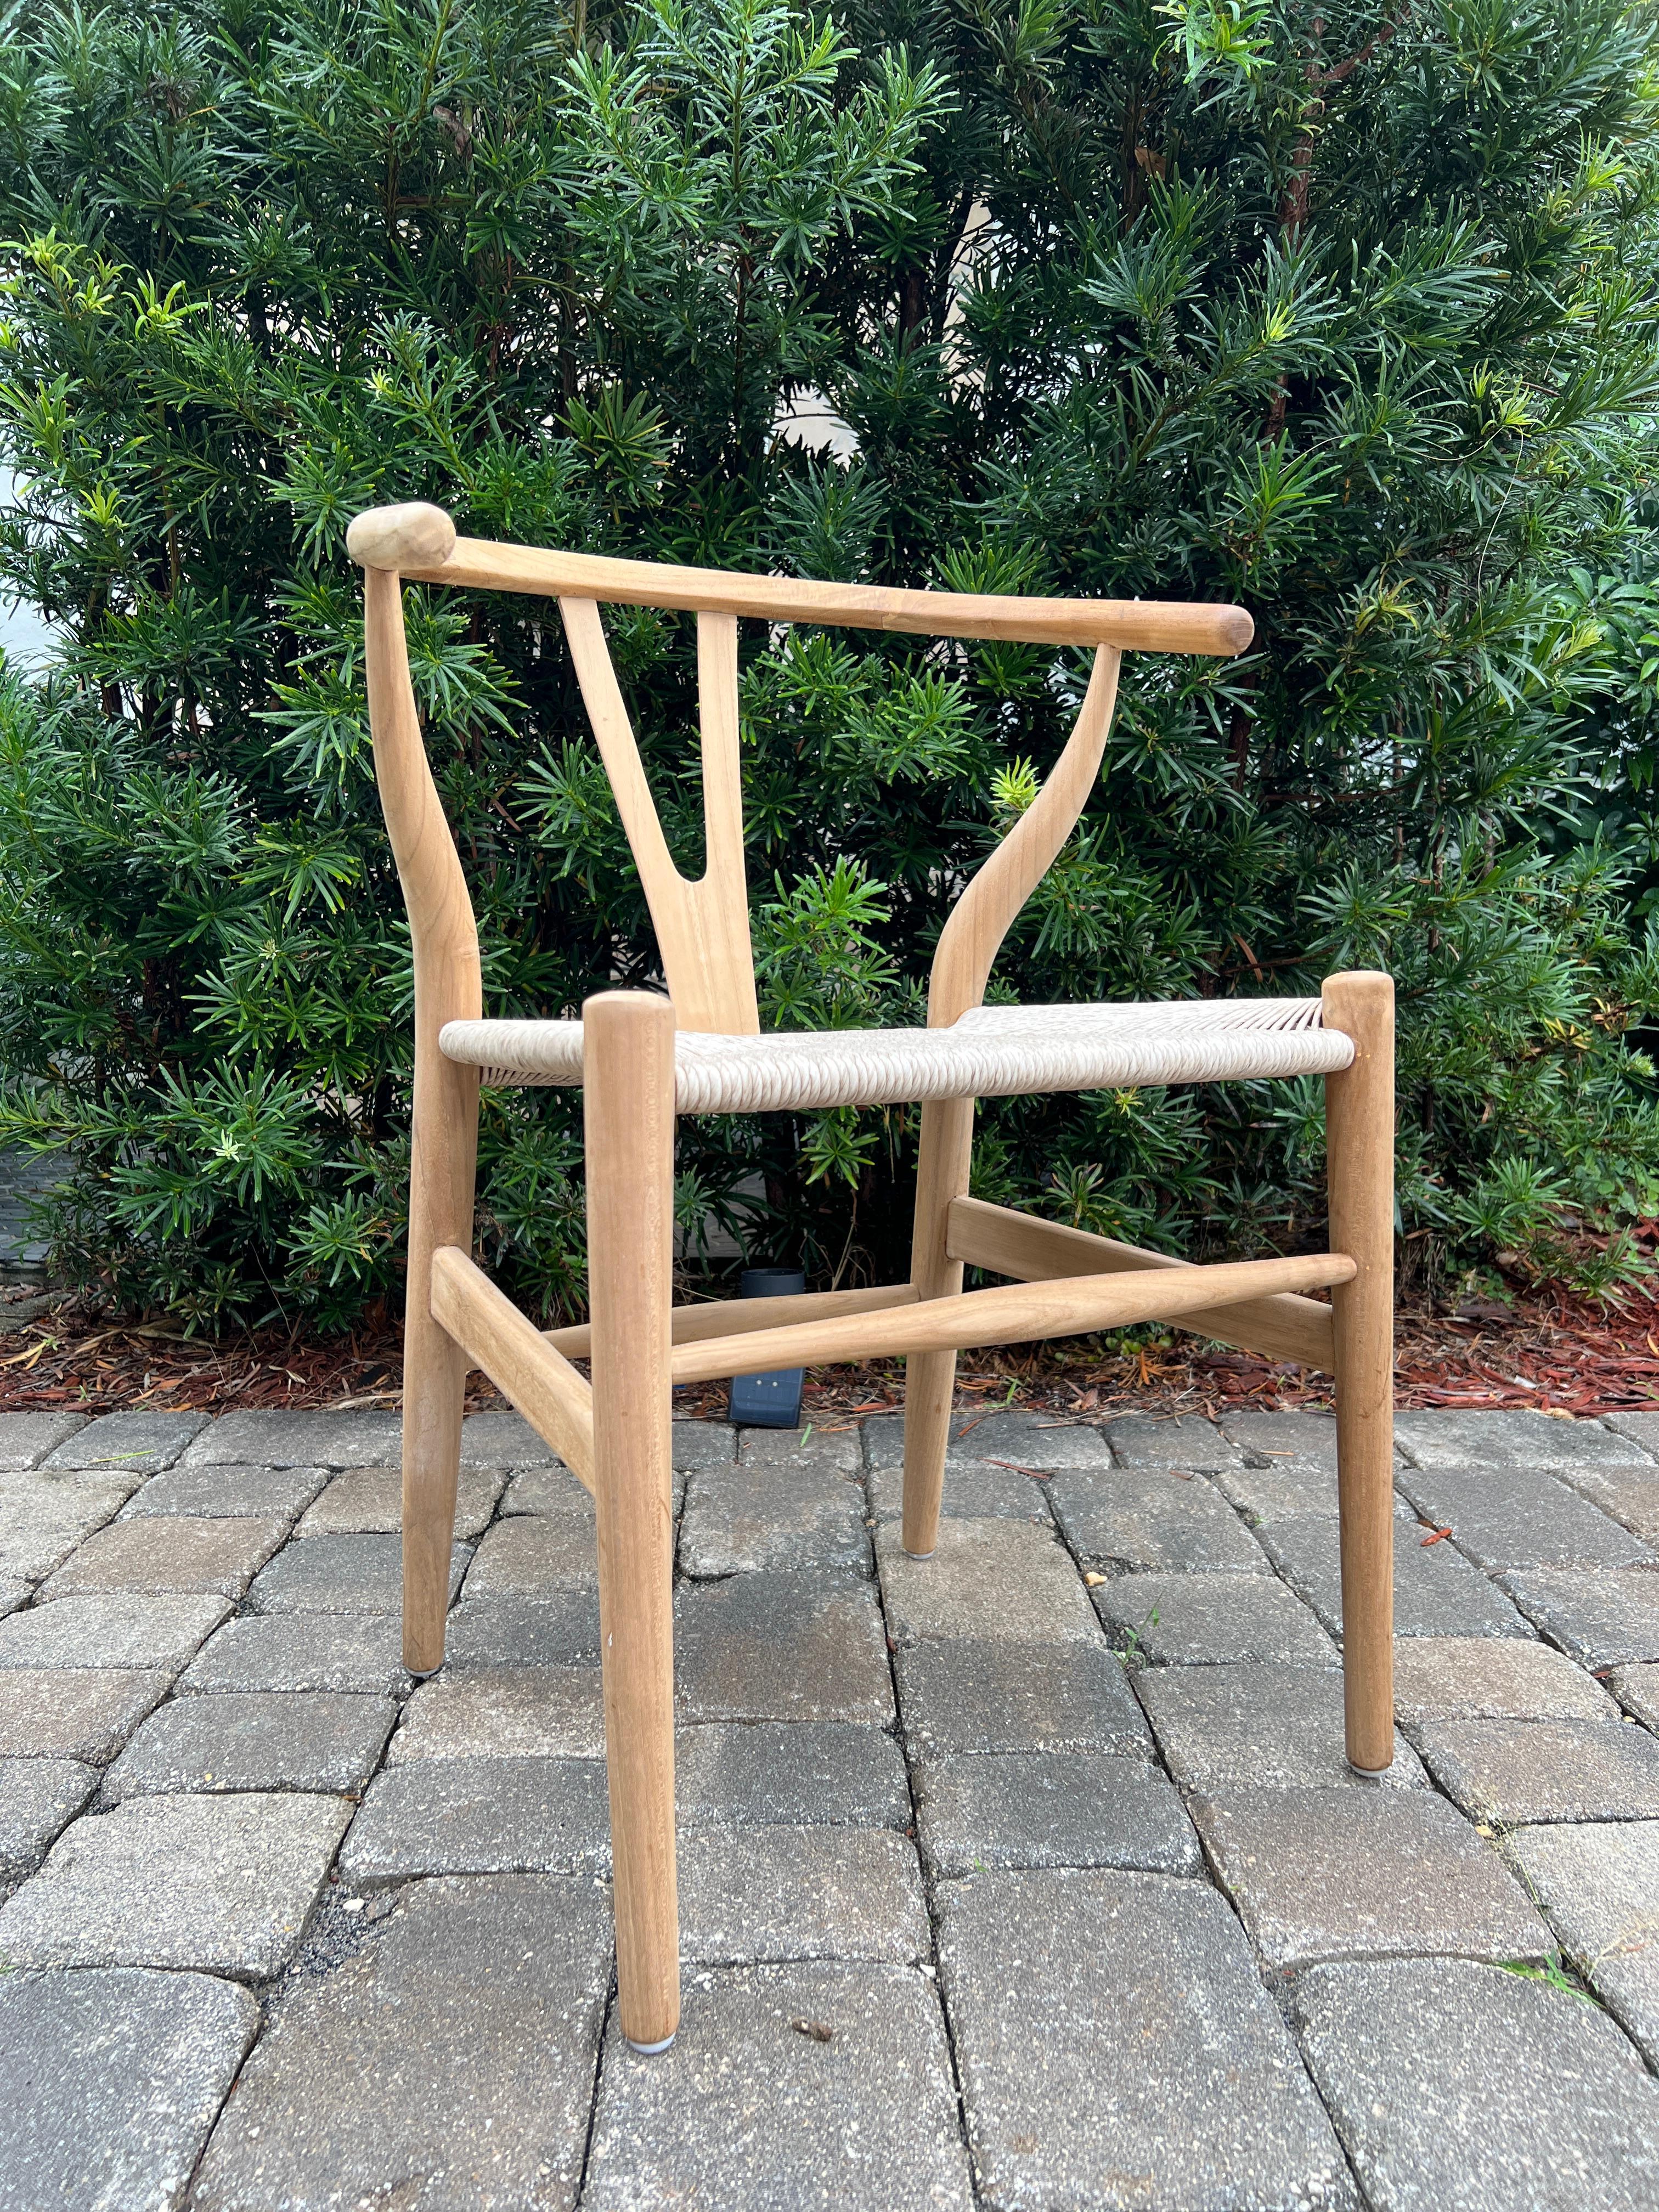 Dutch Mid-Century Modern Chair in Natural Teak Wood with Handwoven Seat, Denmark